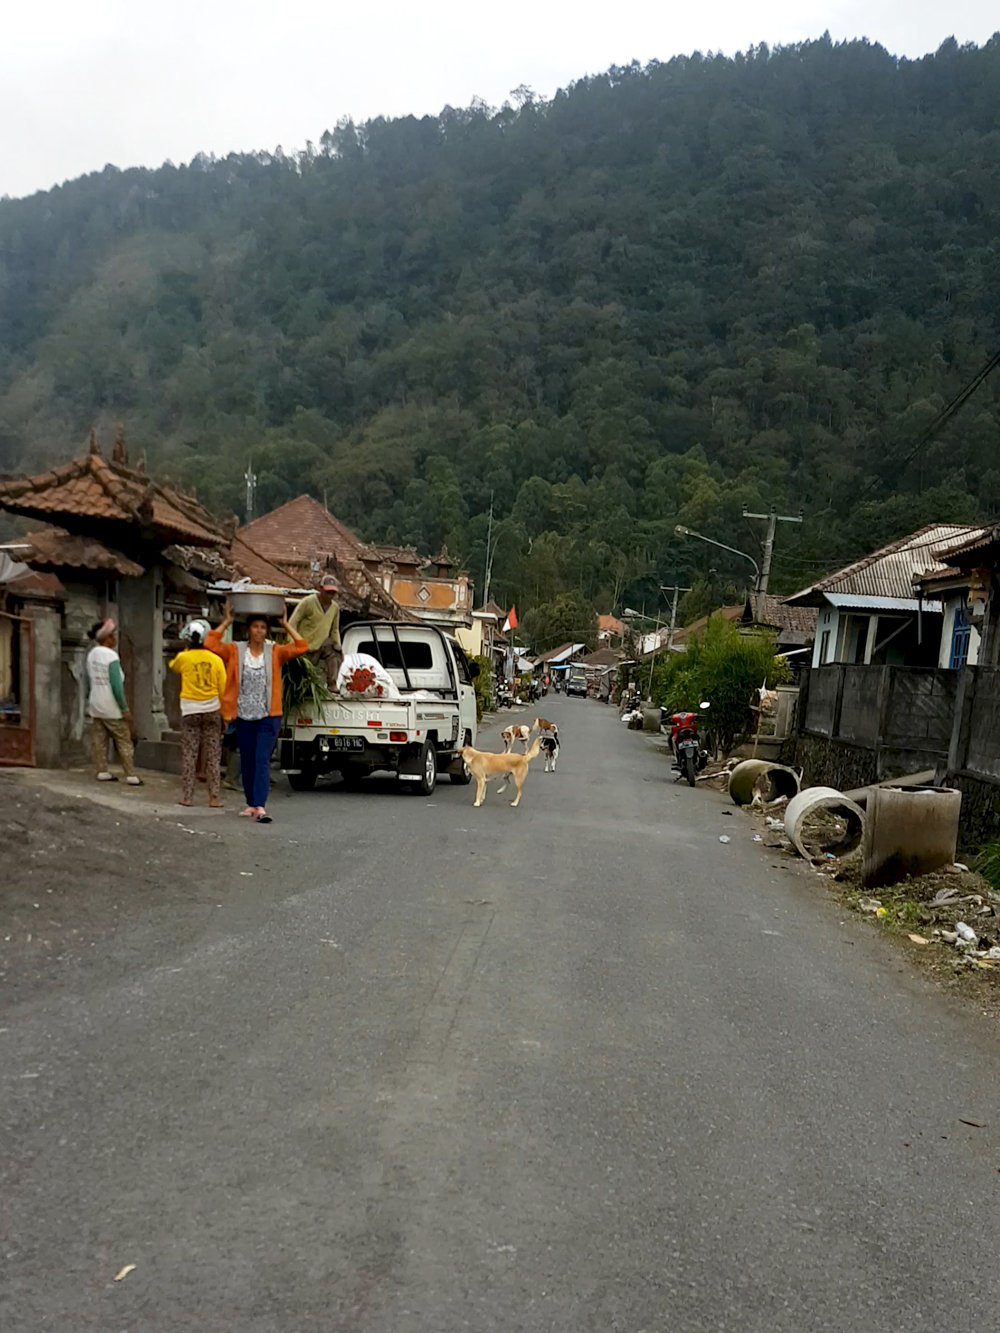 Road near Mount Batur